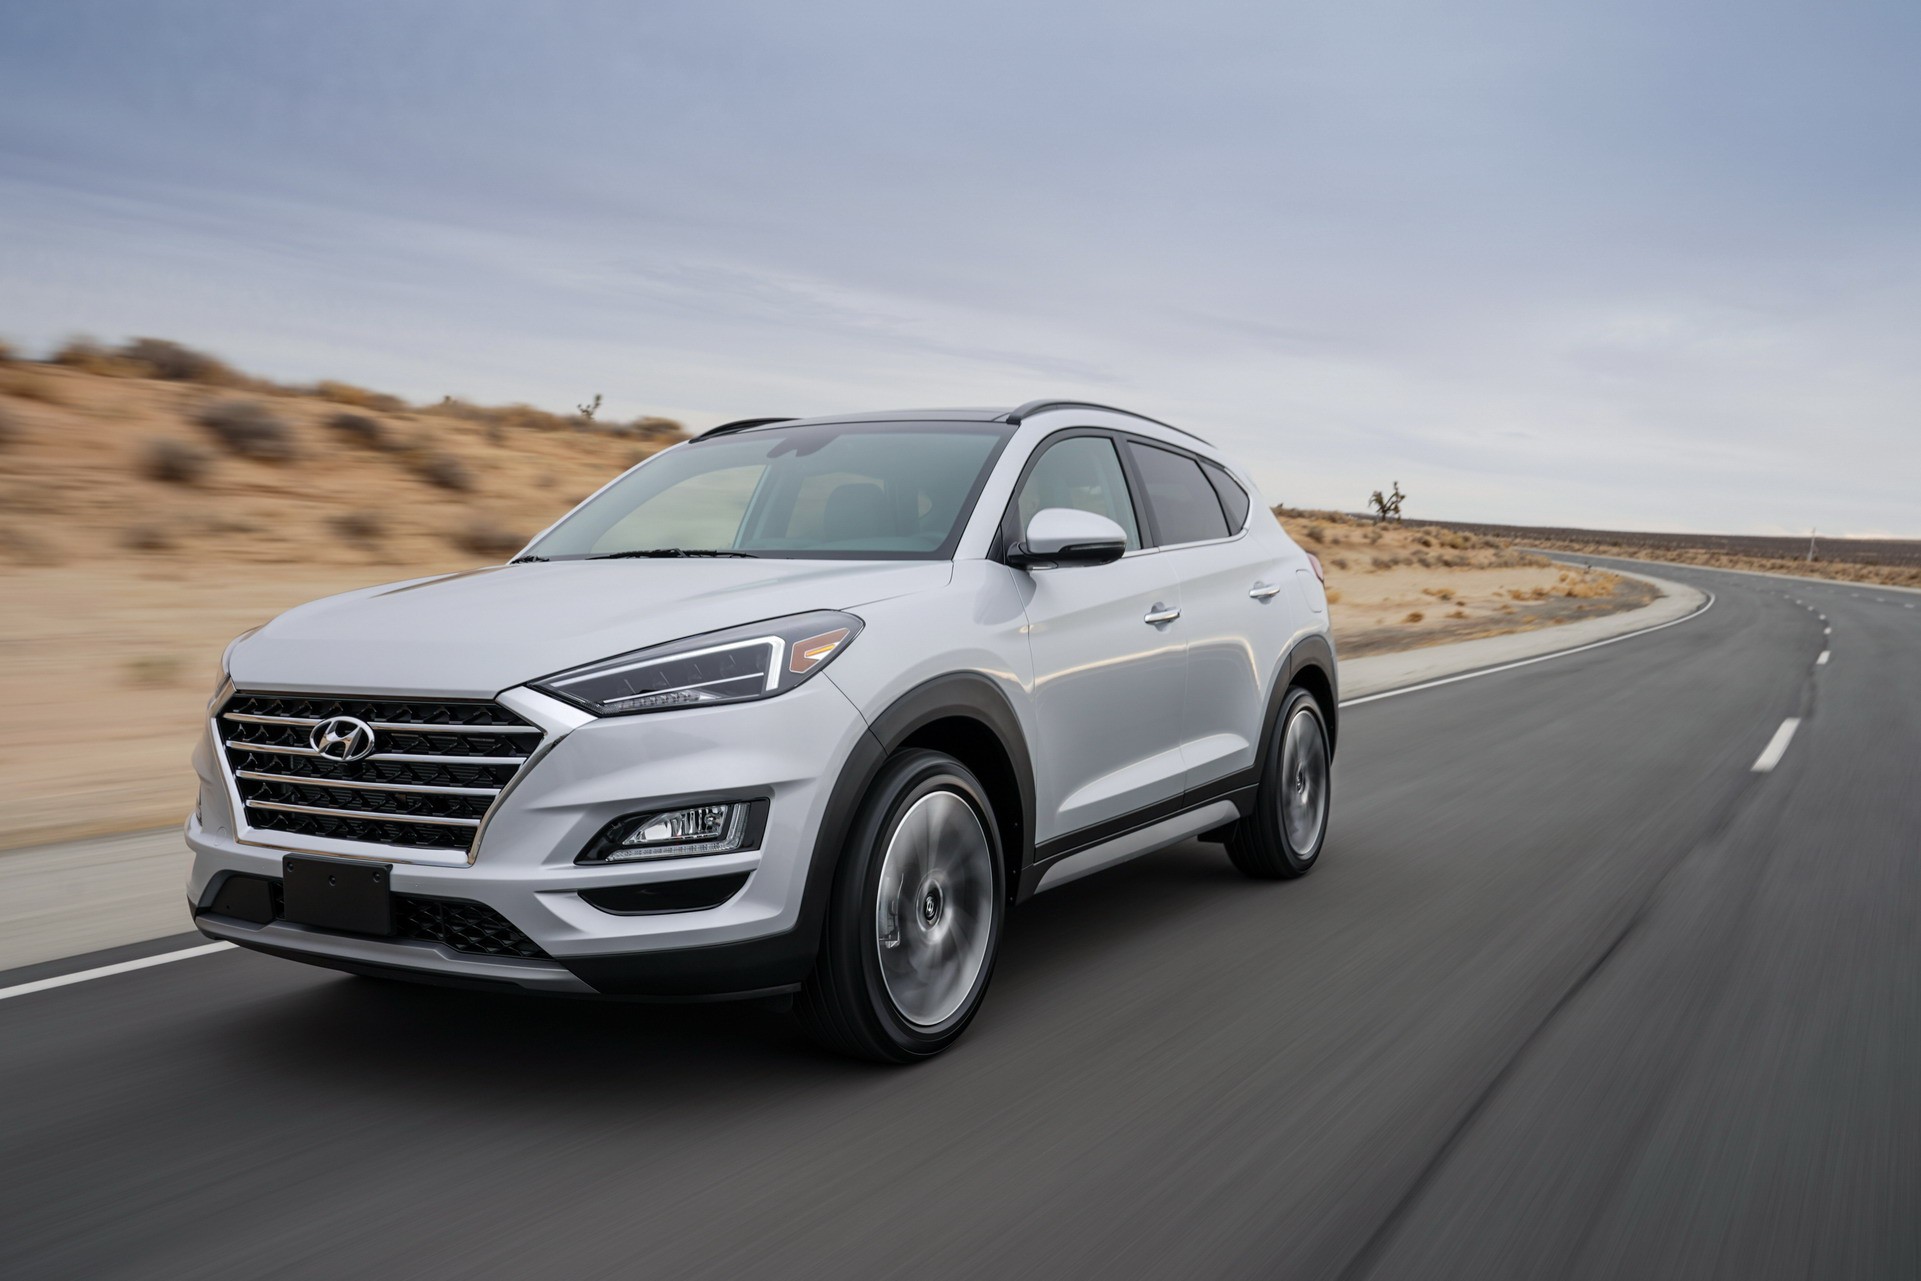 2019 Hyundai Tucson Pricing Announced, Starts At 23,200